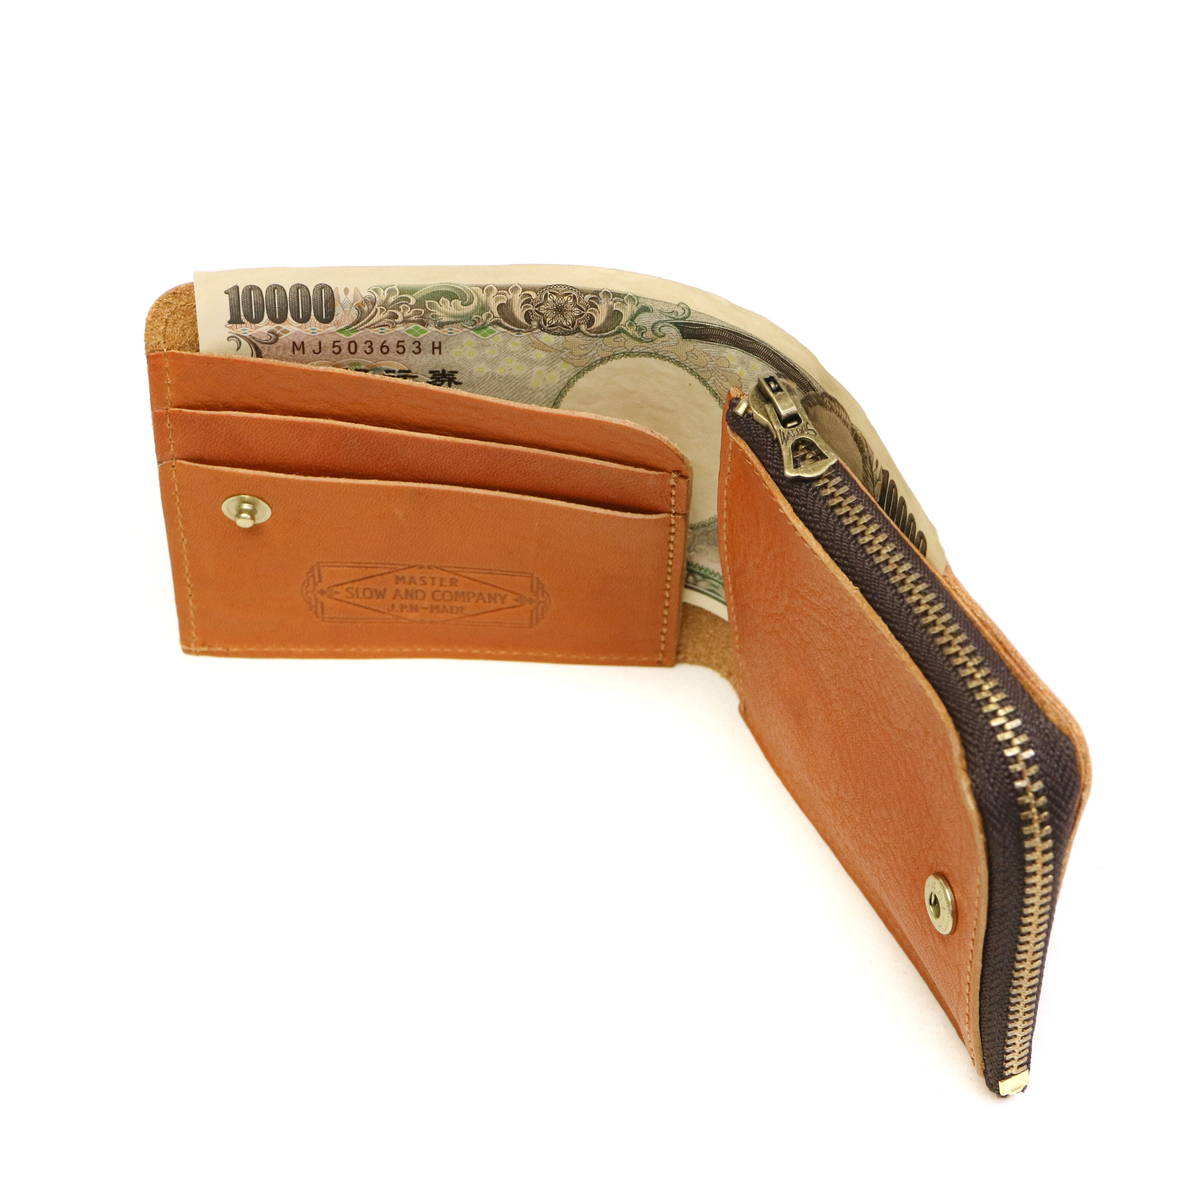 SLOW スロウ bono compact mini wallet 二つ折り財布 333S80I｜【正規